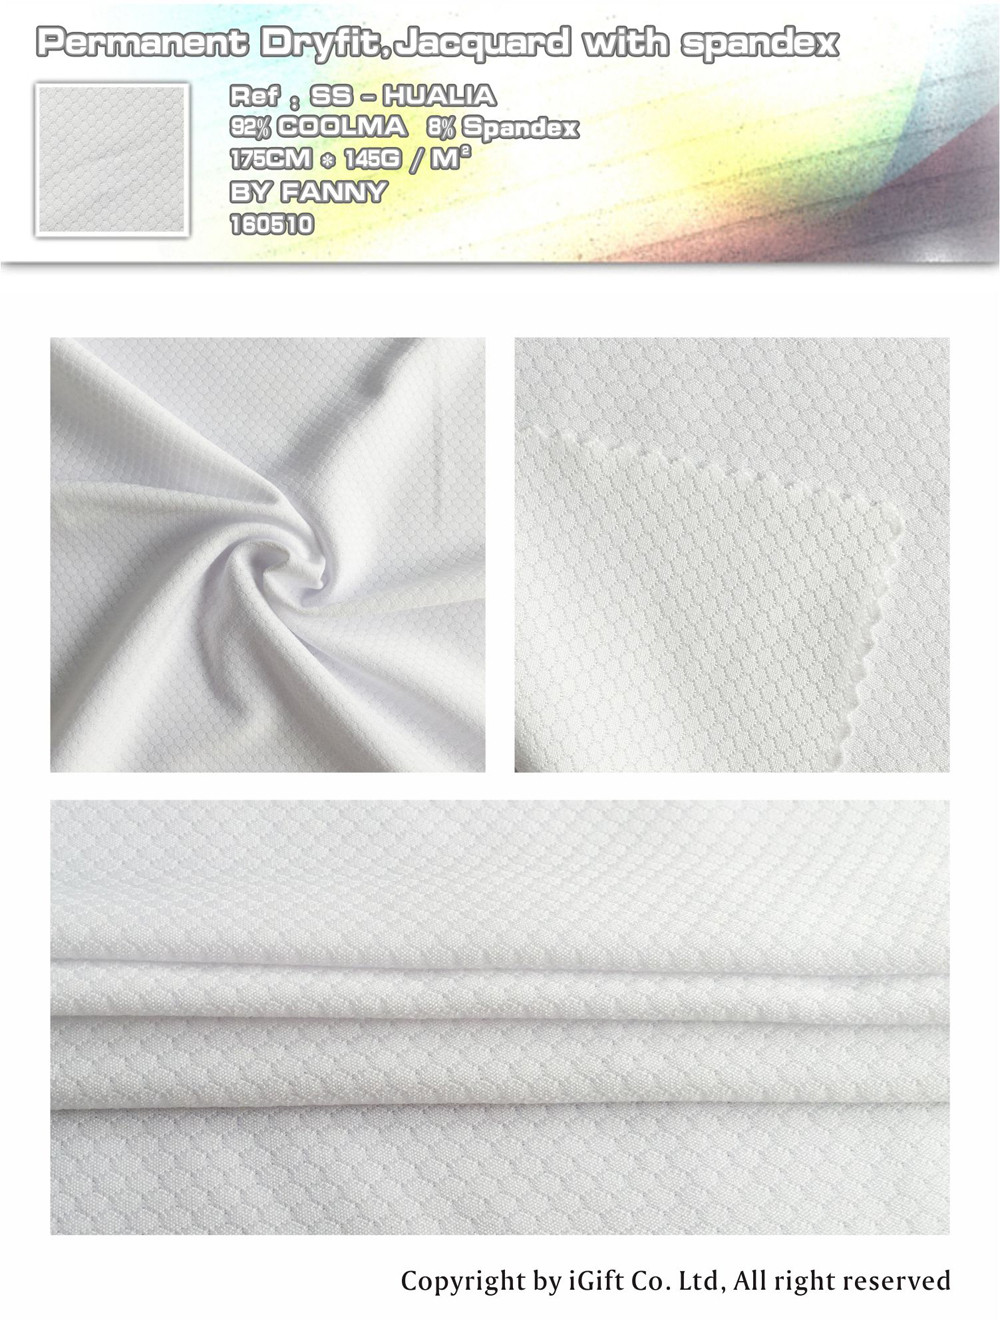 Permanent Dryfit,Jacquard with spandex     Ref:SS-HUALIA    92％ COOLMA   8％Spandex   175CM*145G/M²   BY  FANNY   160510